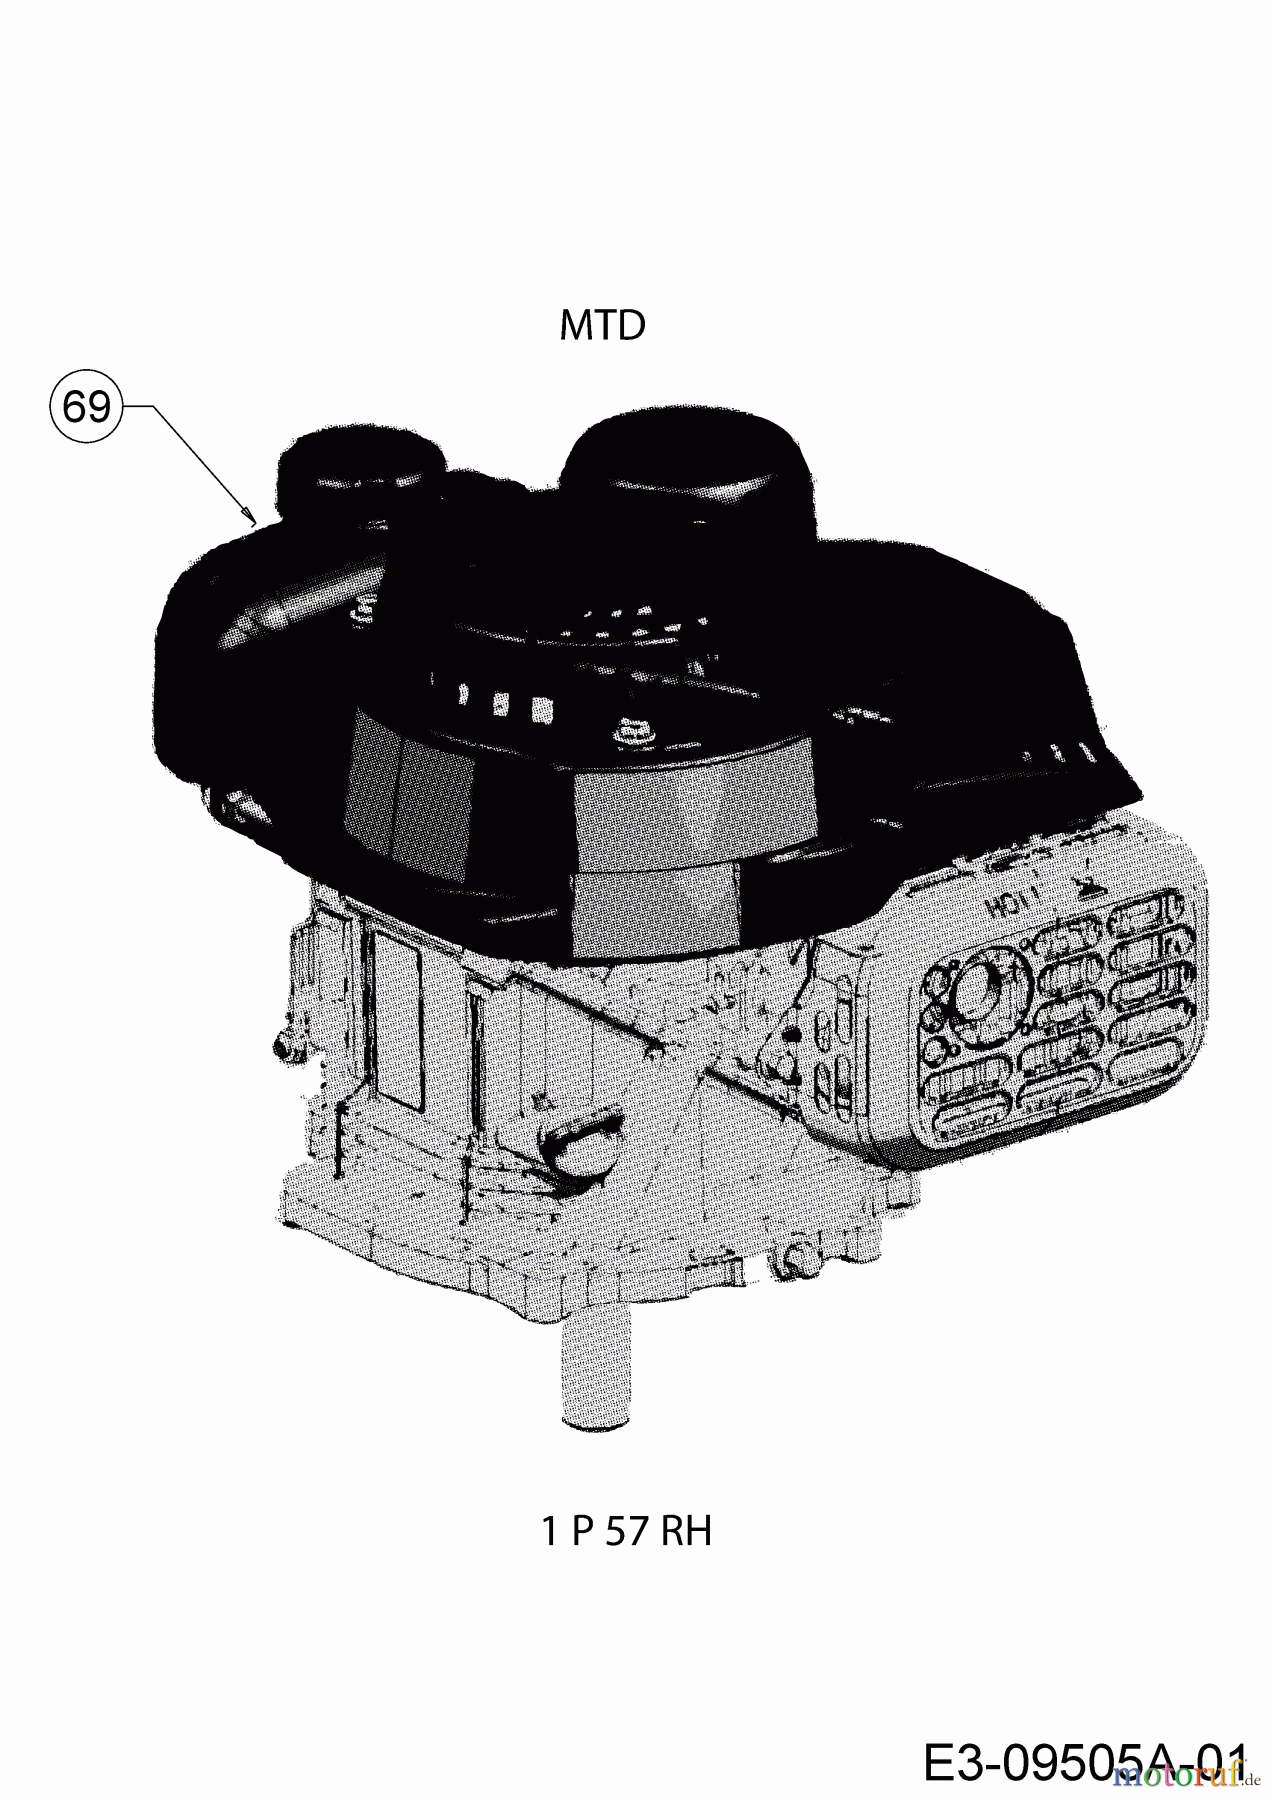  Mastercut Tondeuse thermique MC 46 PO 11A-J1SJ659  (2016) Moteur MTD